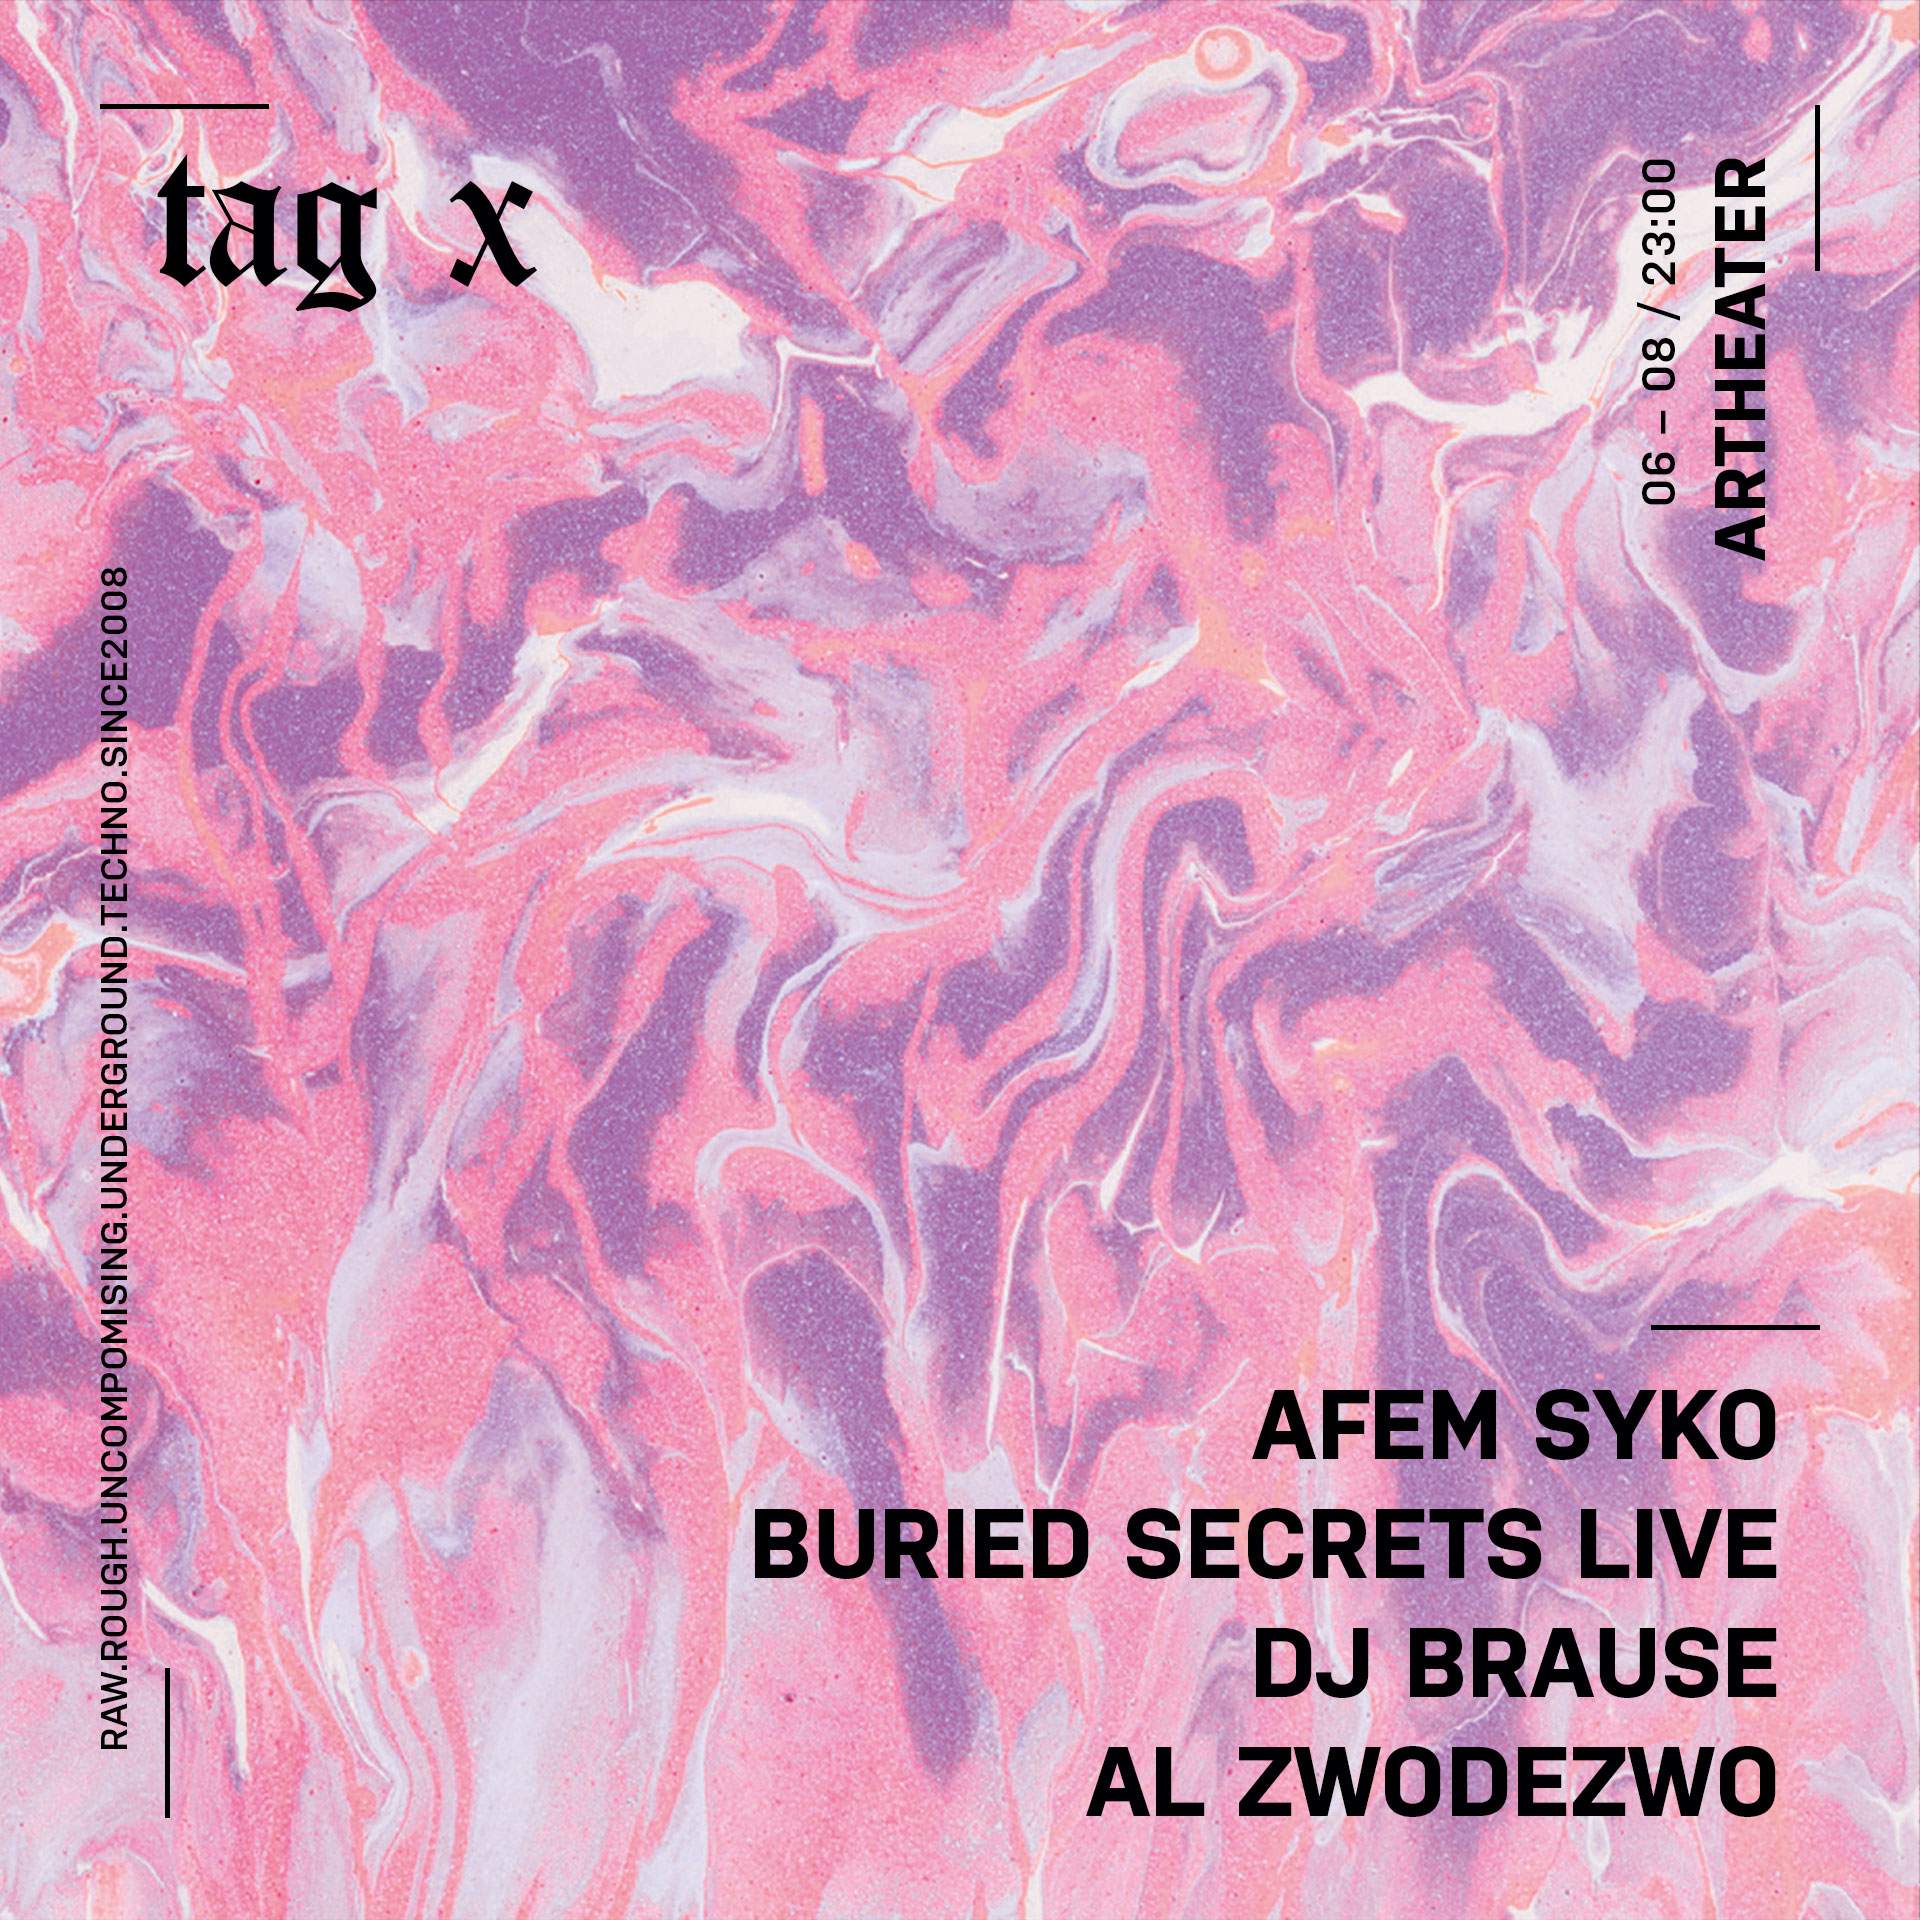 Tag X with Afem Syko & Buried Secrets Live - Página frontal